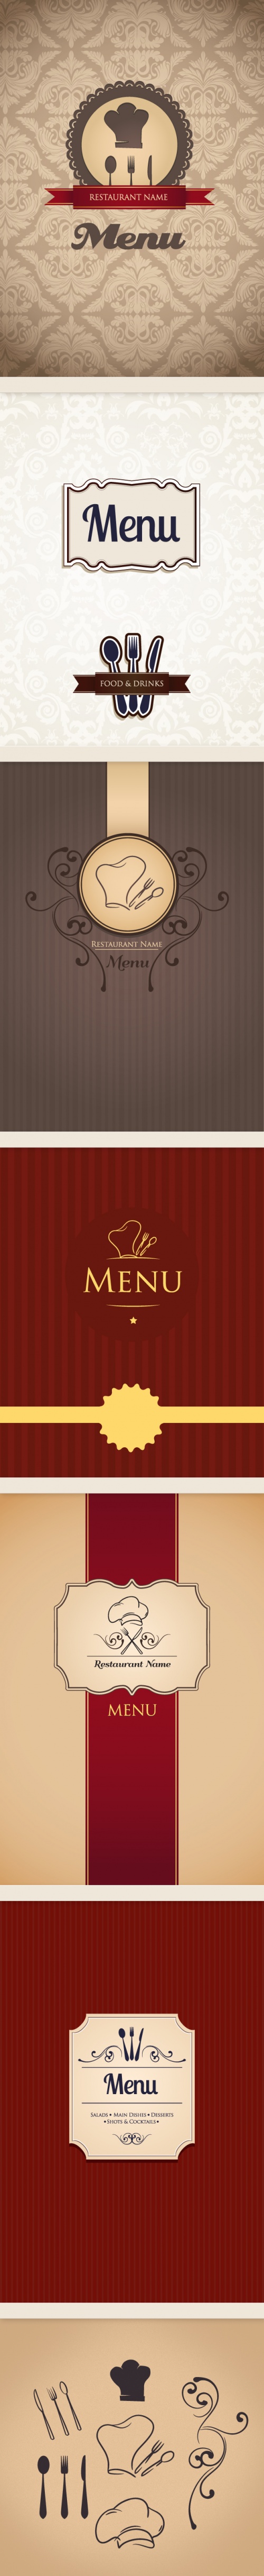 Designtnt - Restaurant Menu Vector Set